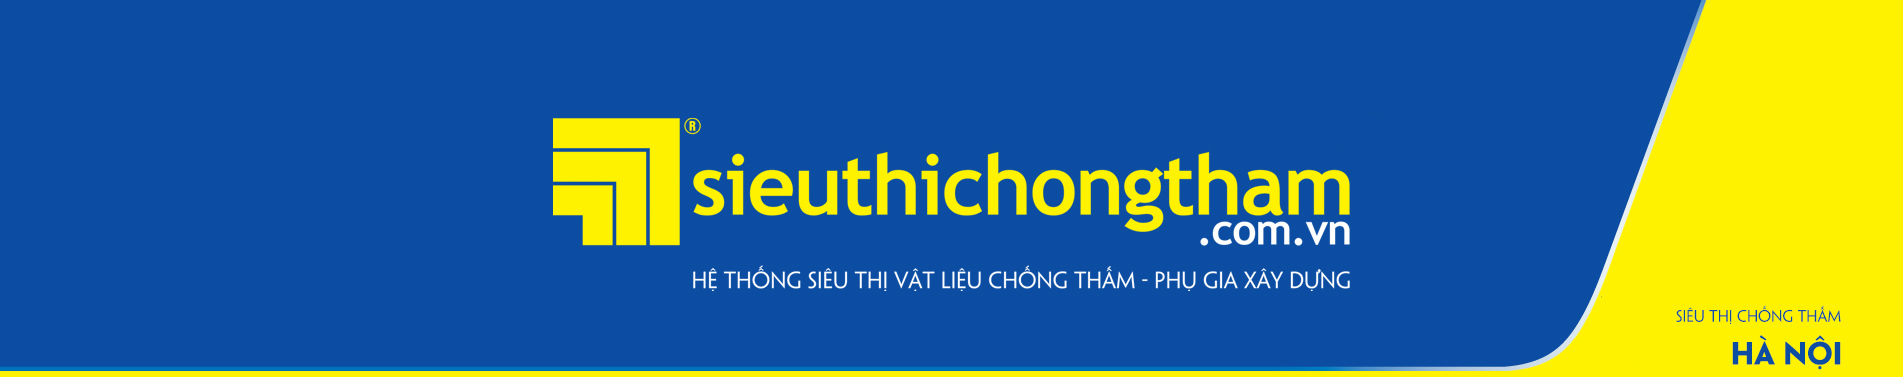 Sieu Thi Chong Tham Ha Noi